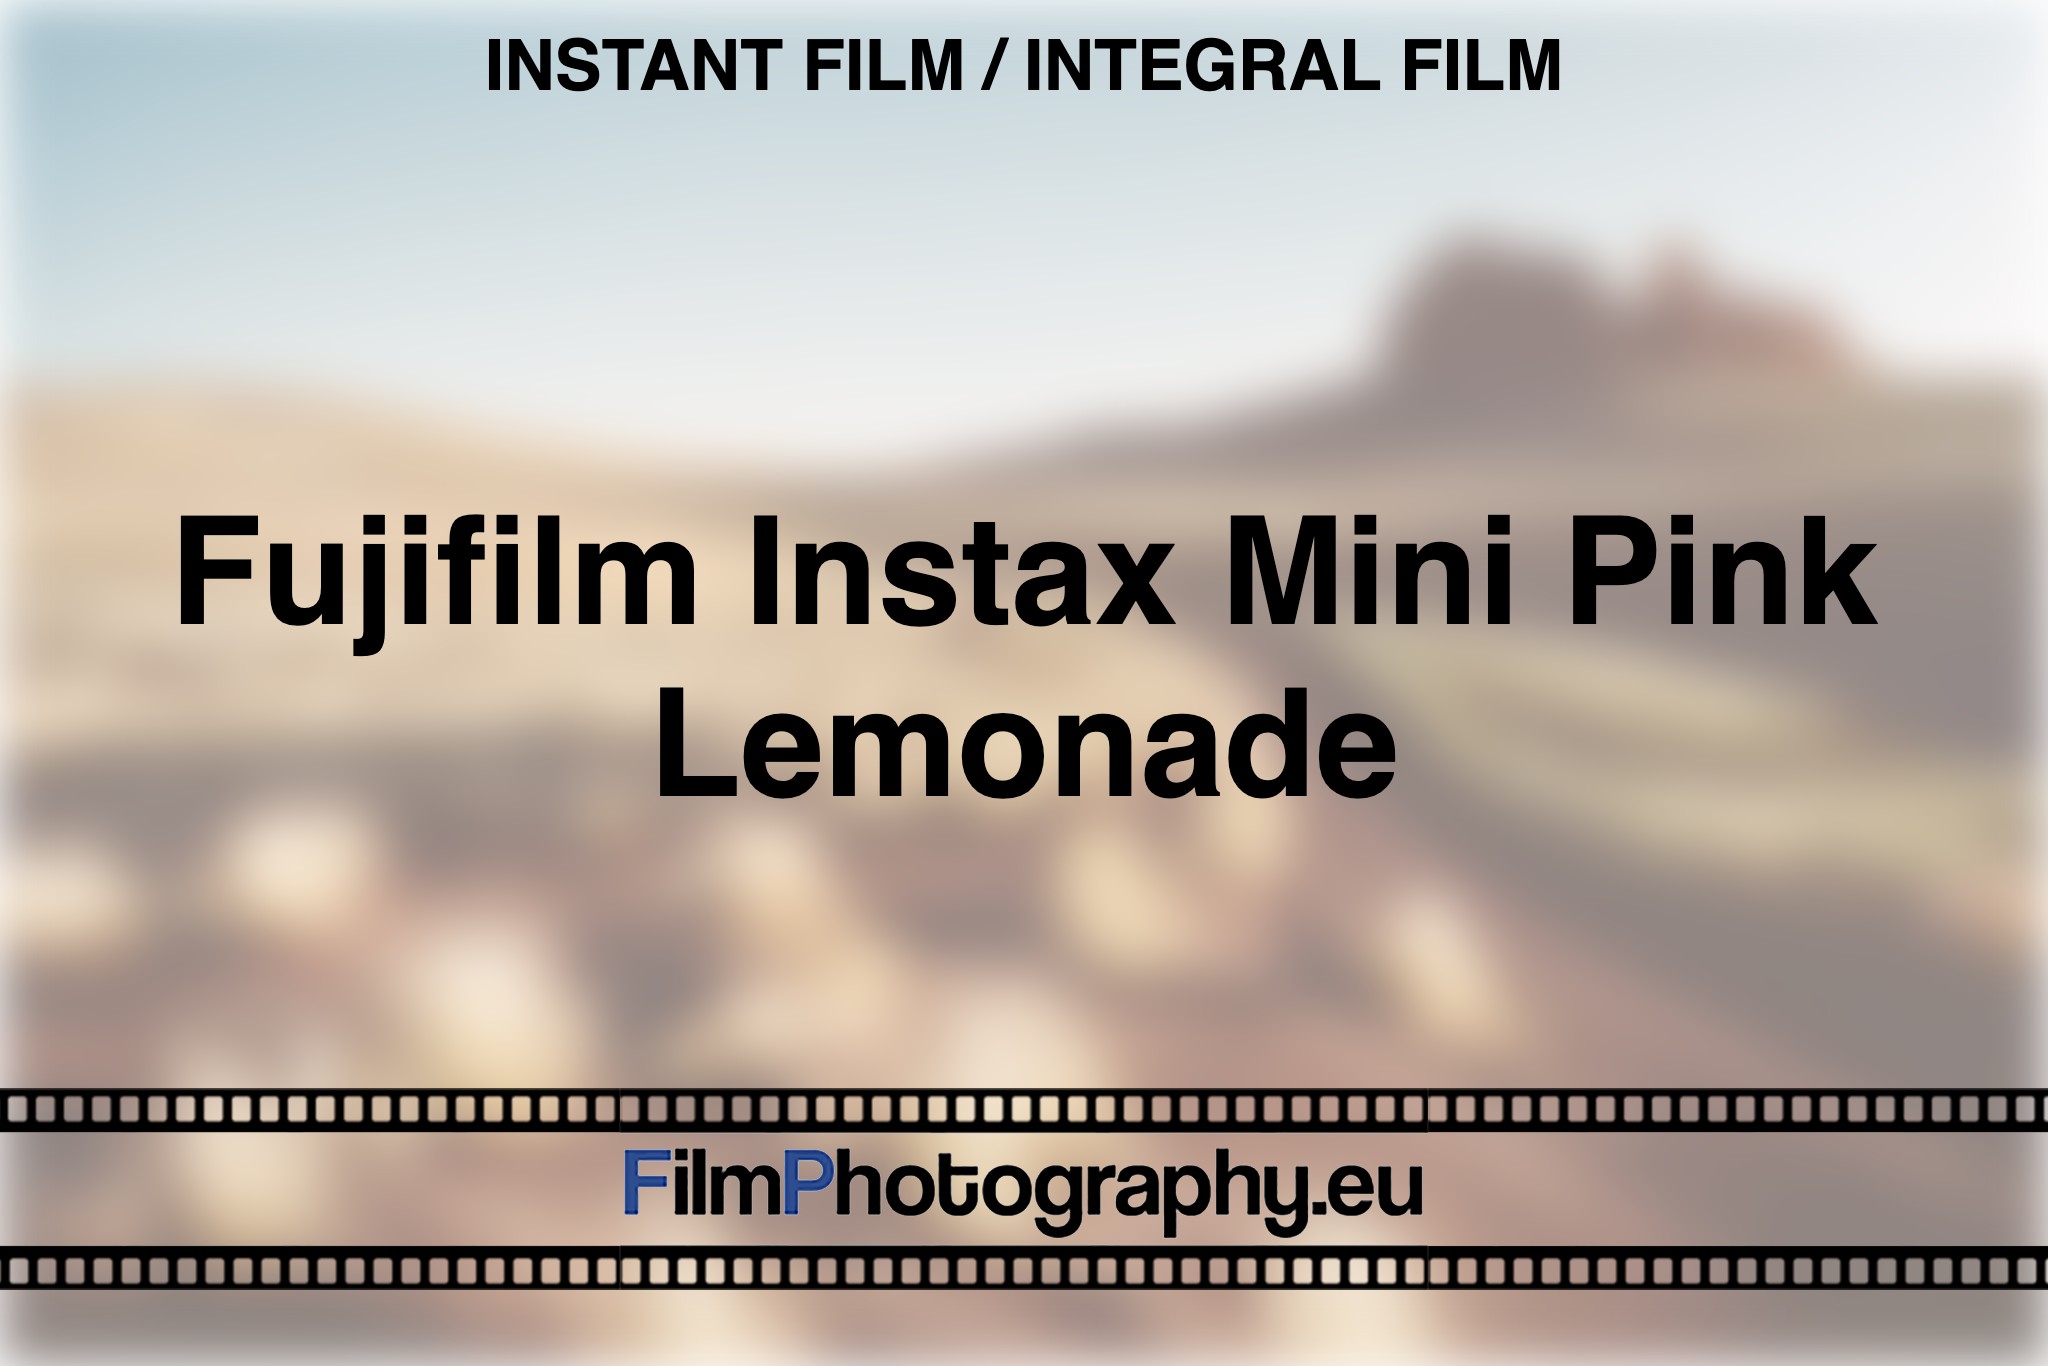 fujifilm-instax-mini-pink-lemonade-instant-film-integral-film-bnv